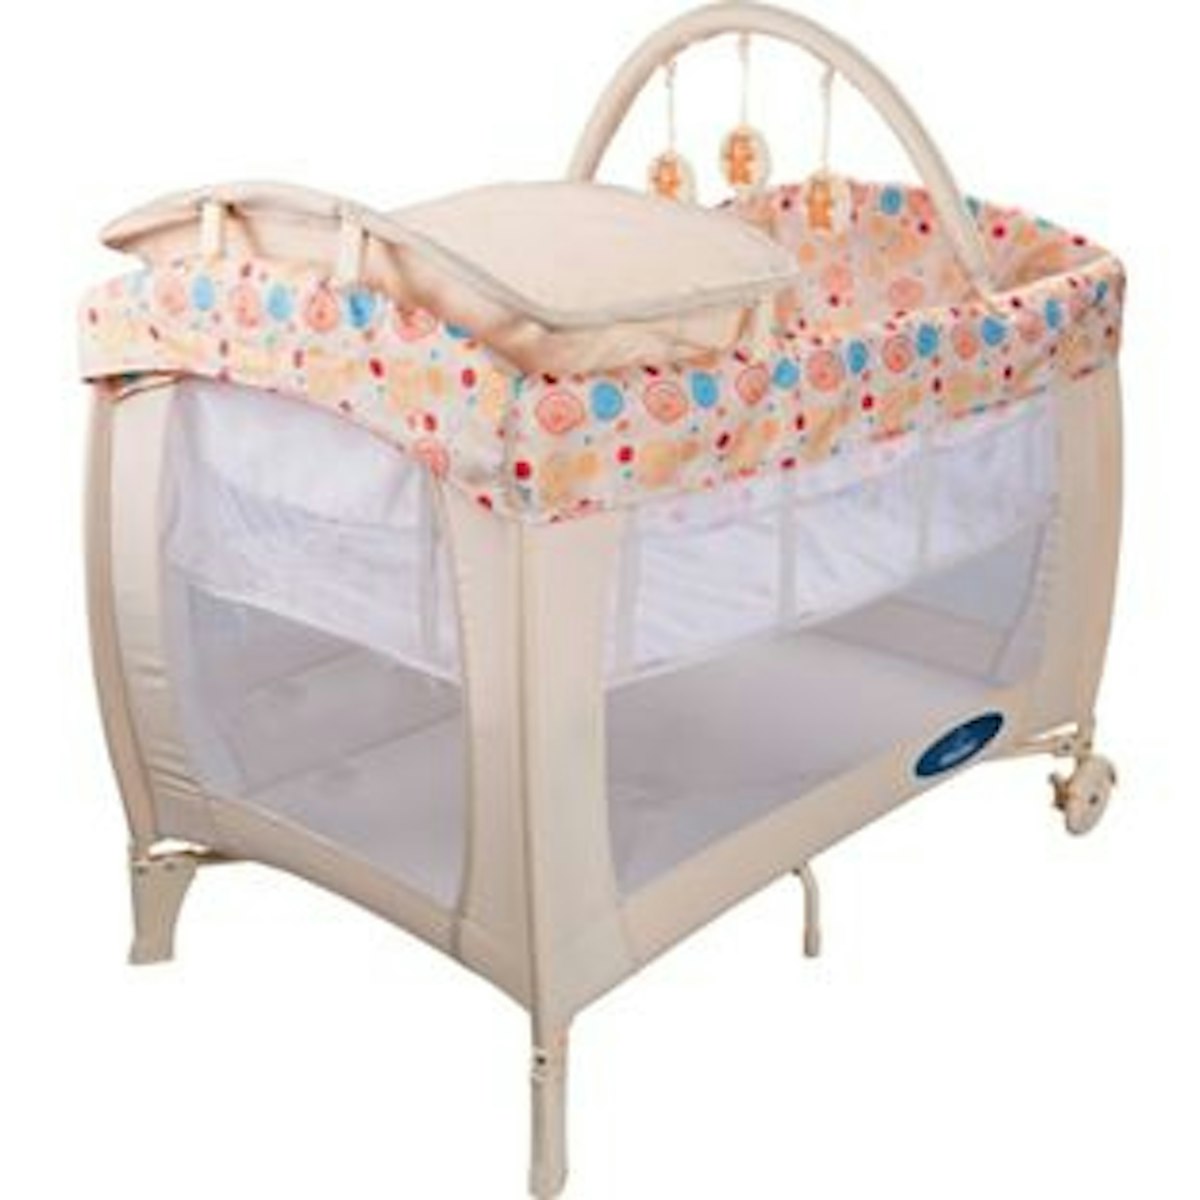 babystart travel cot mattress size